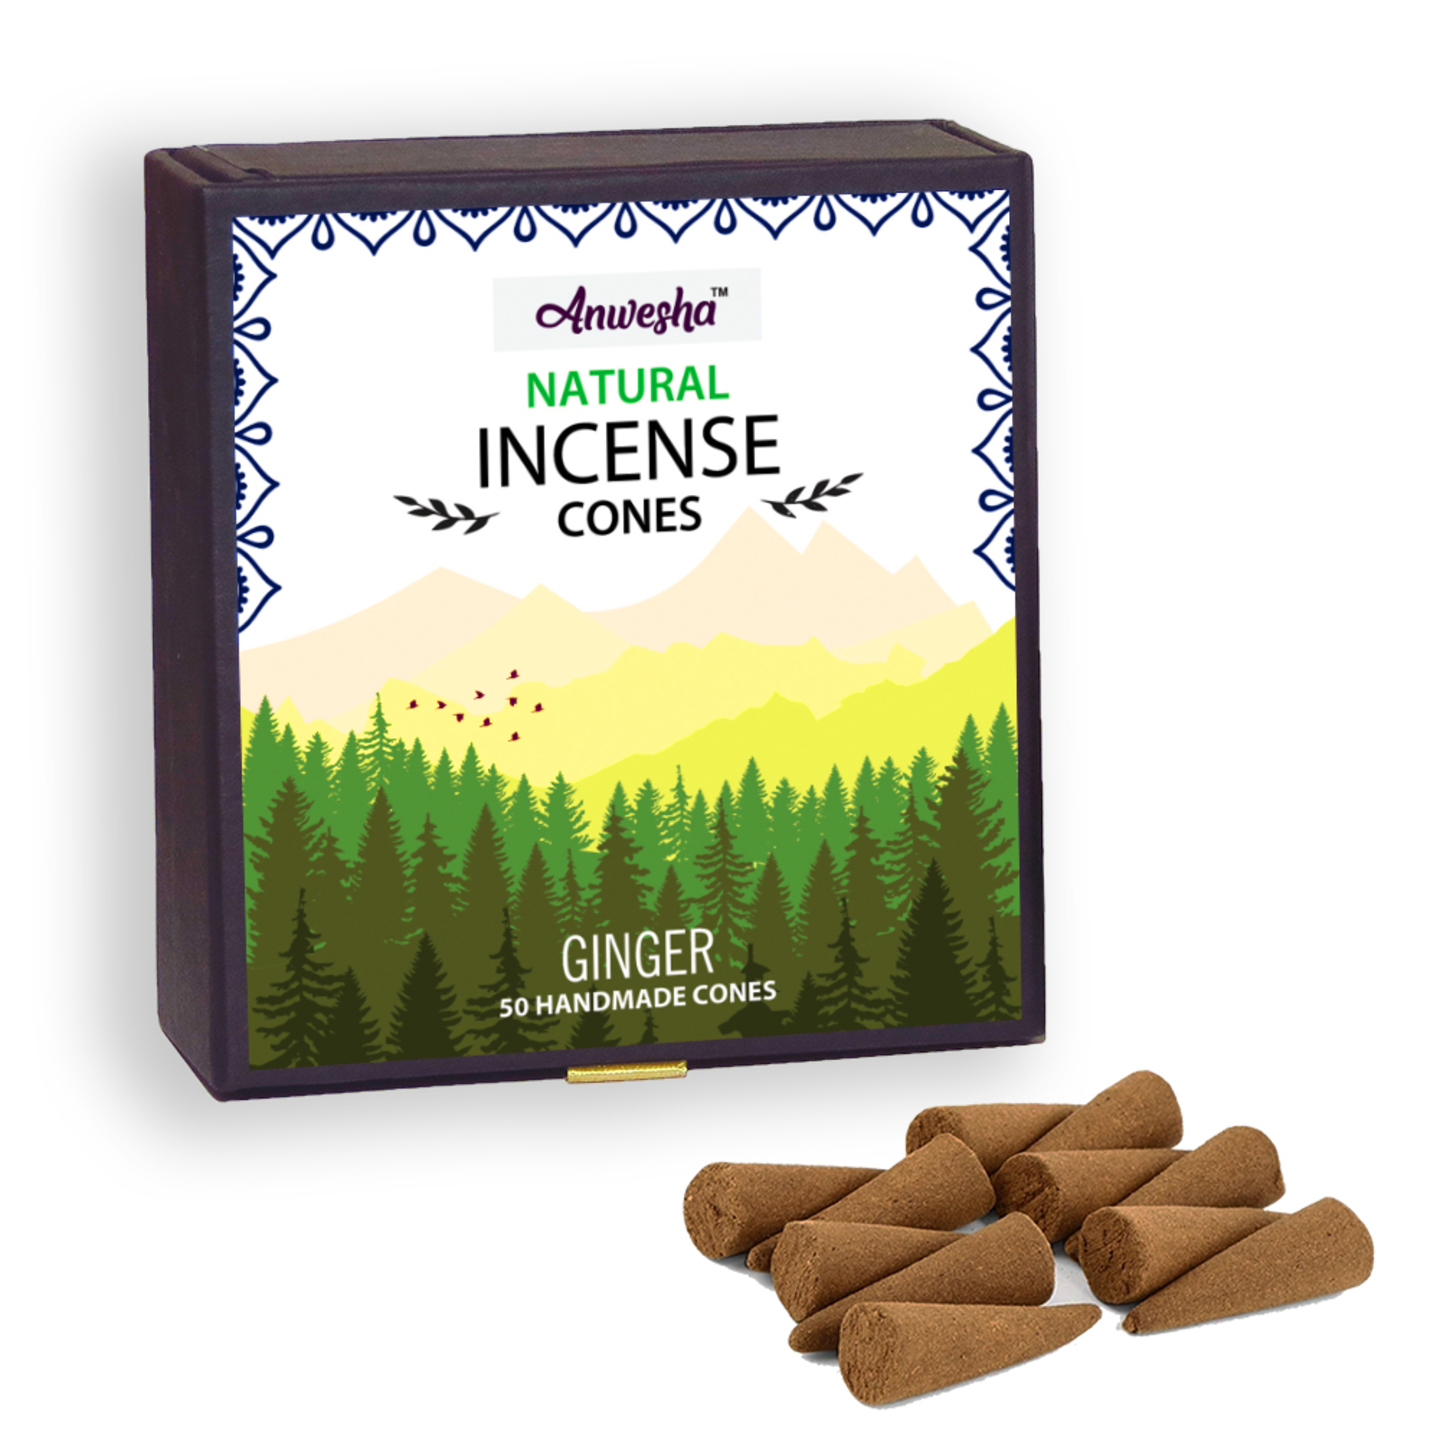 Ginger Incense Cones Box - 50 Cones